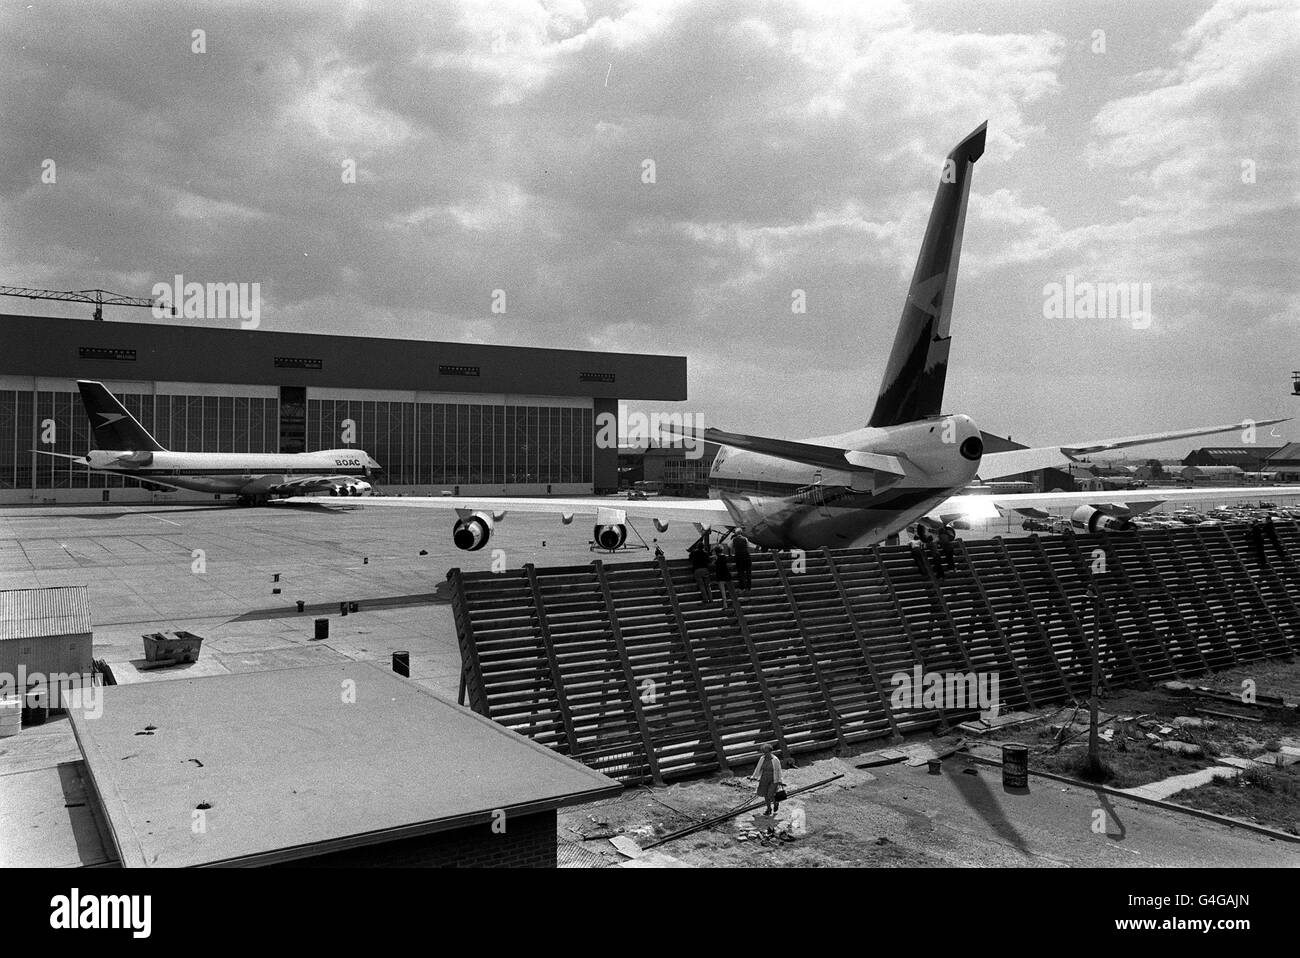 PA NEWS PHOTO 25/5/70 THE NEW BOAC JUMBO JETS OUTSIDE THE NEW JUMBO HANGAR AT HEATHROW AIRPORT IN LONDON Stock Photo